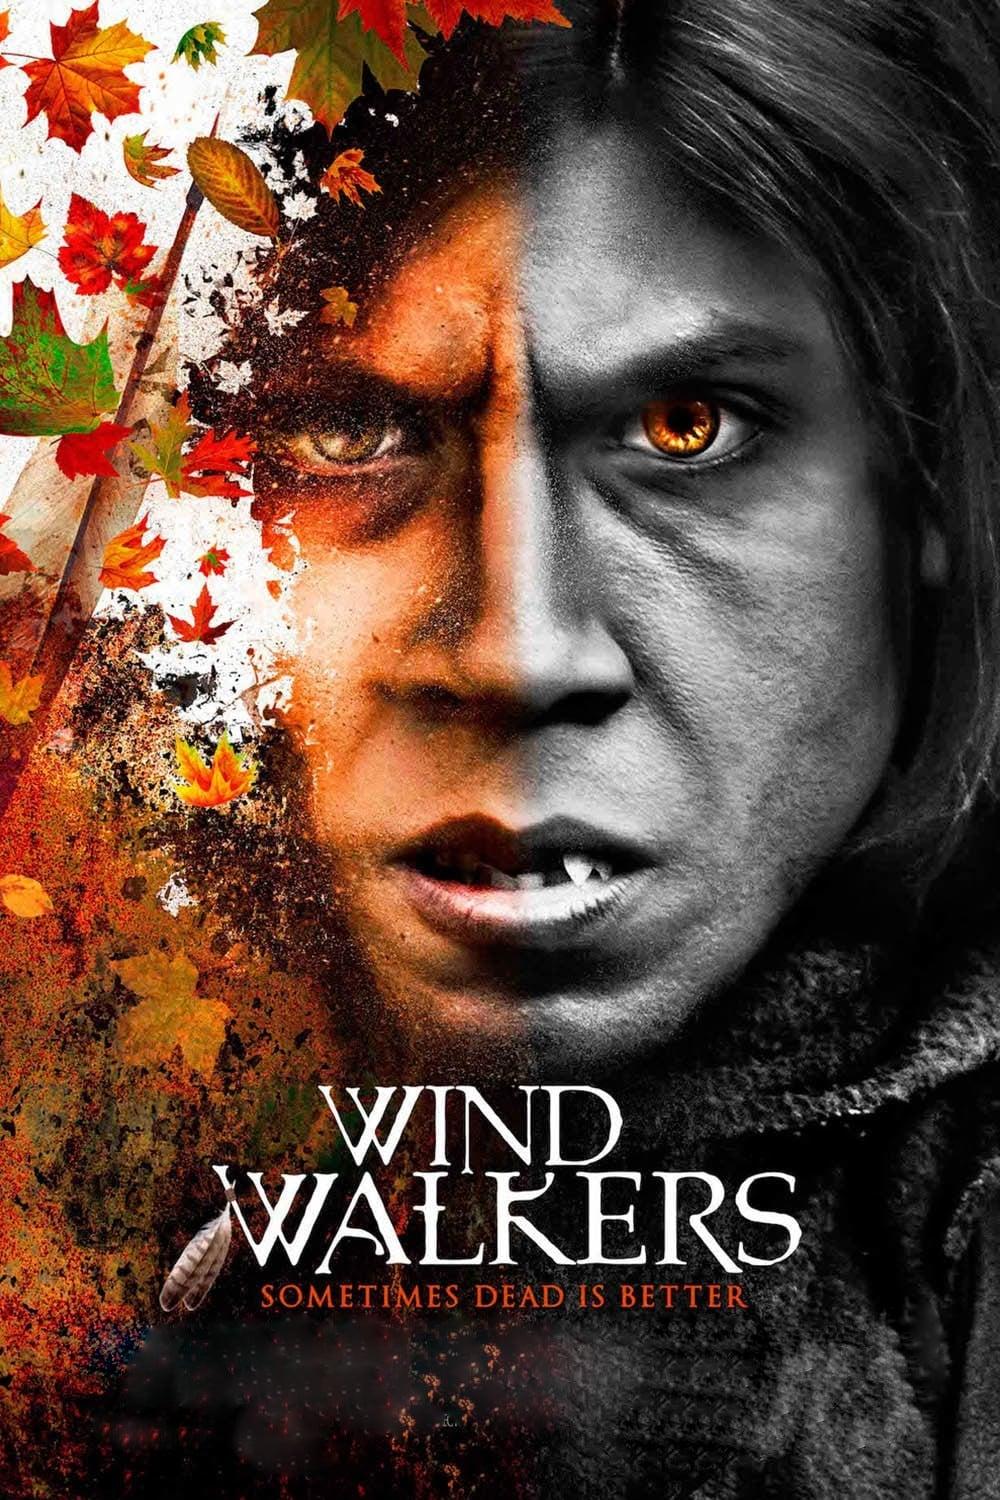 Wind Walkers poster